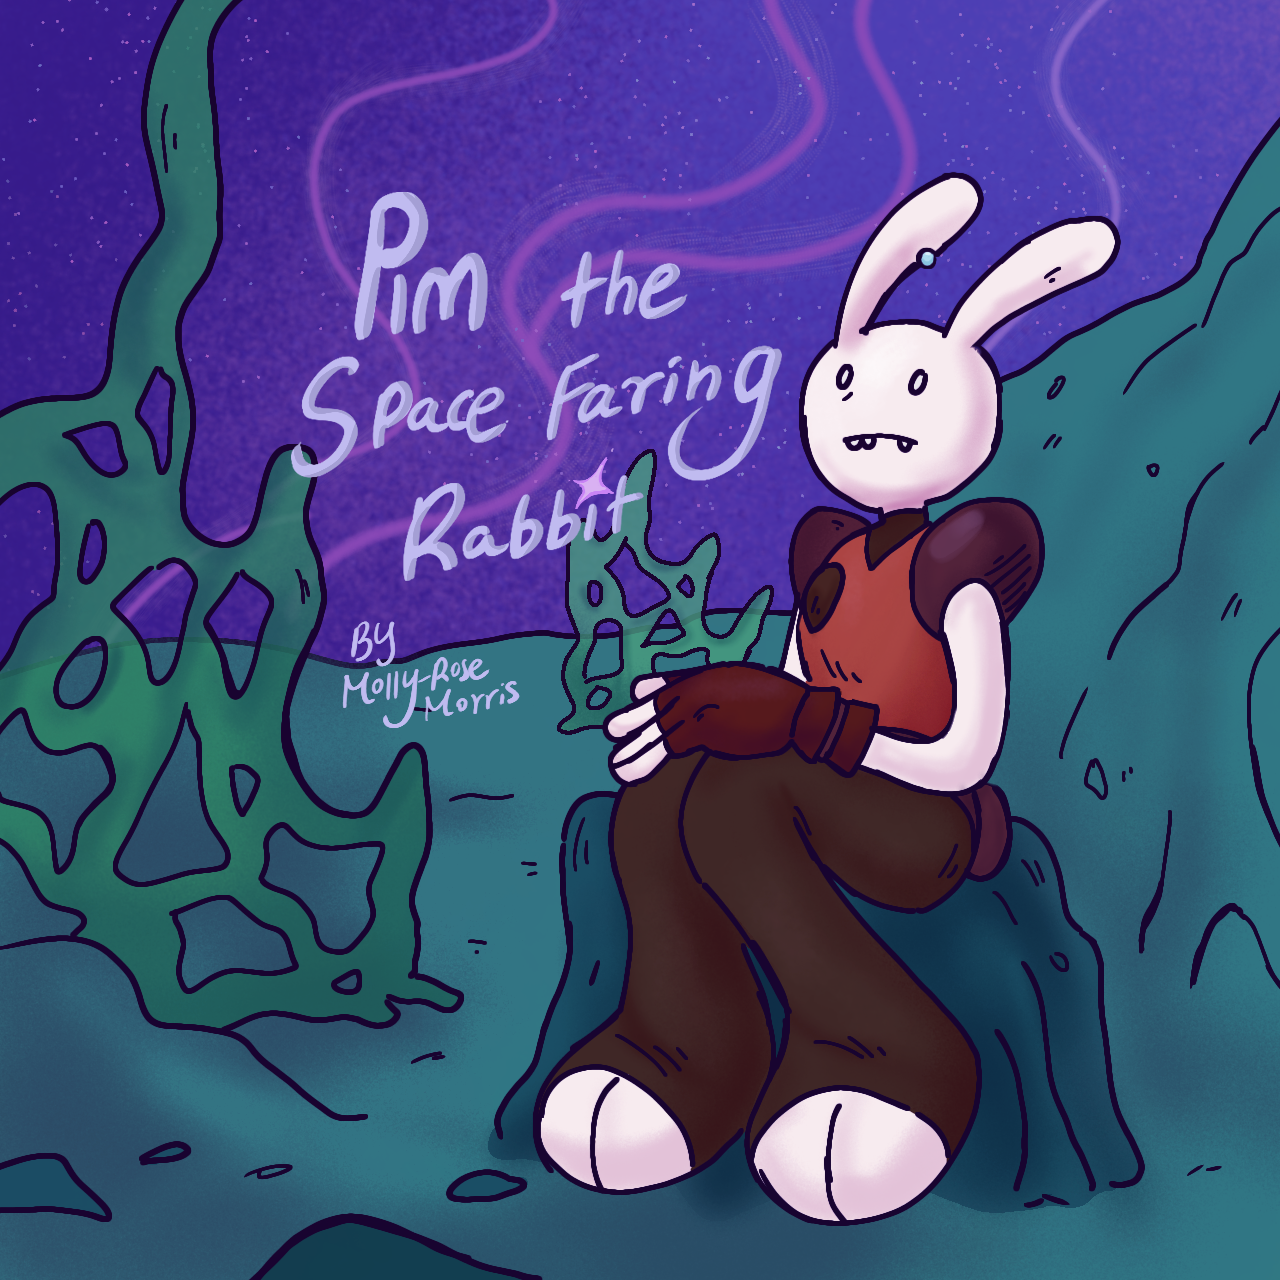 Pim the Space Faring Rabbit